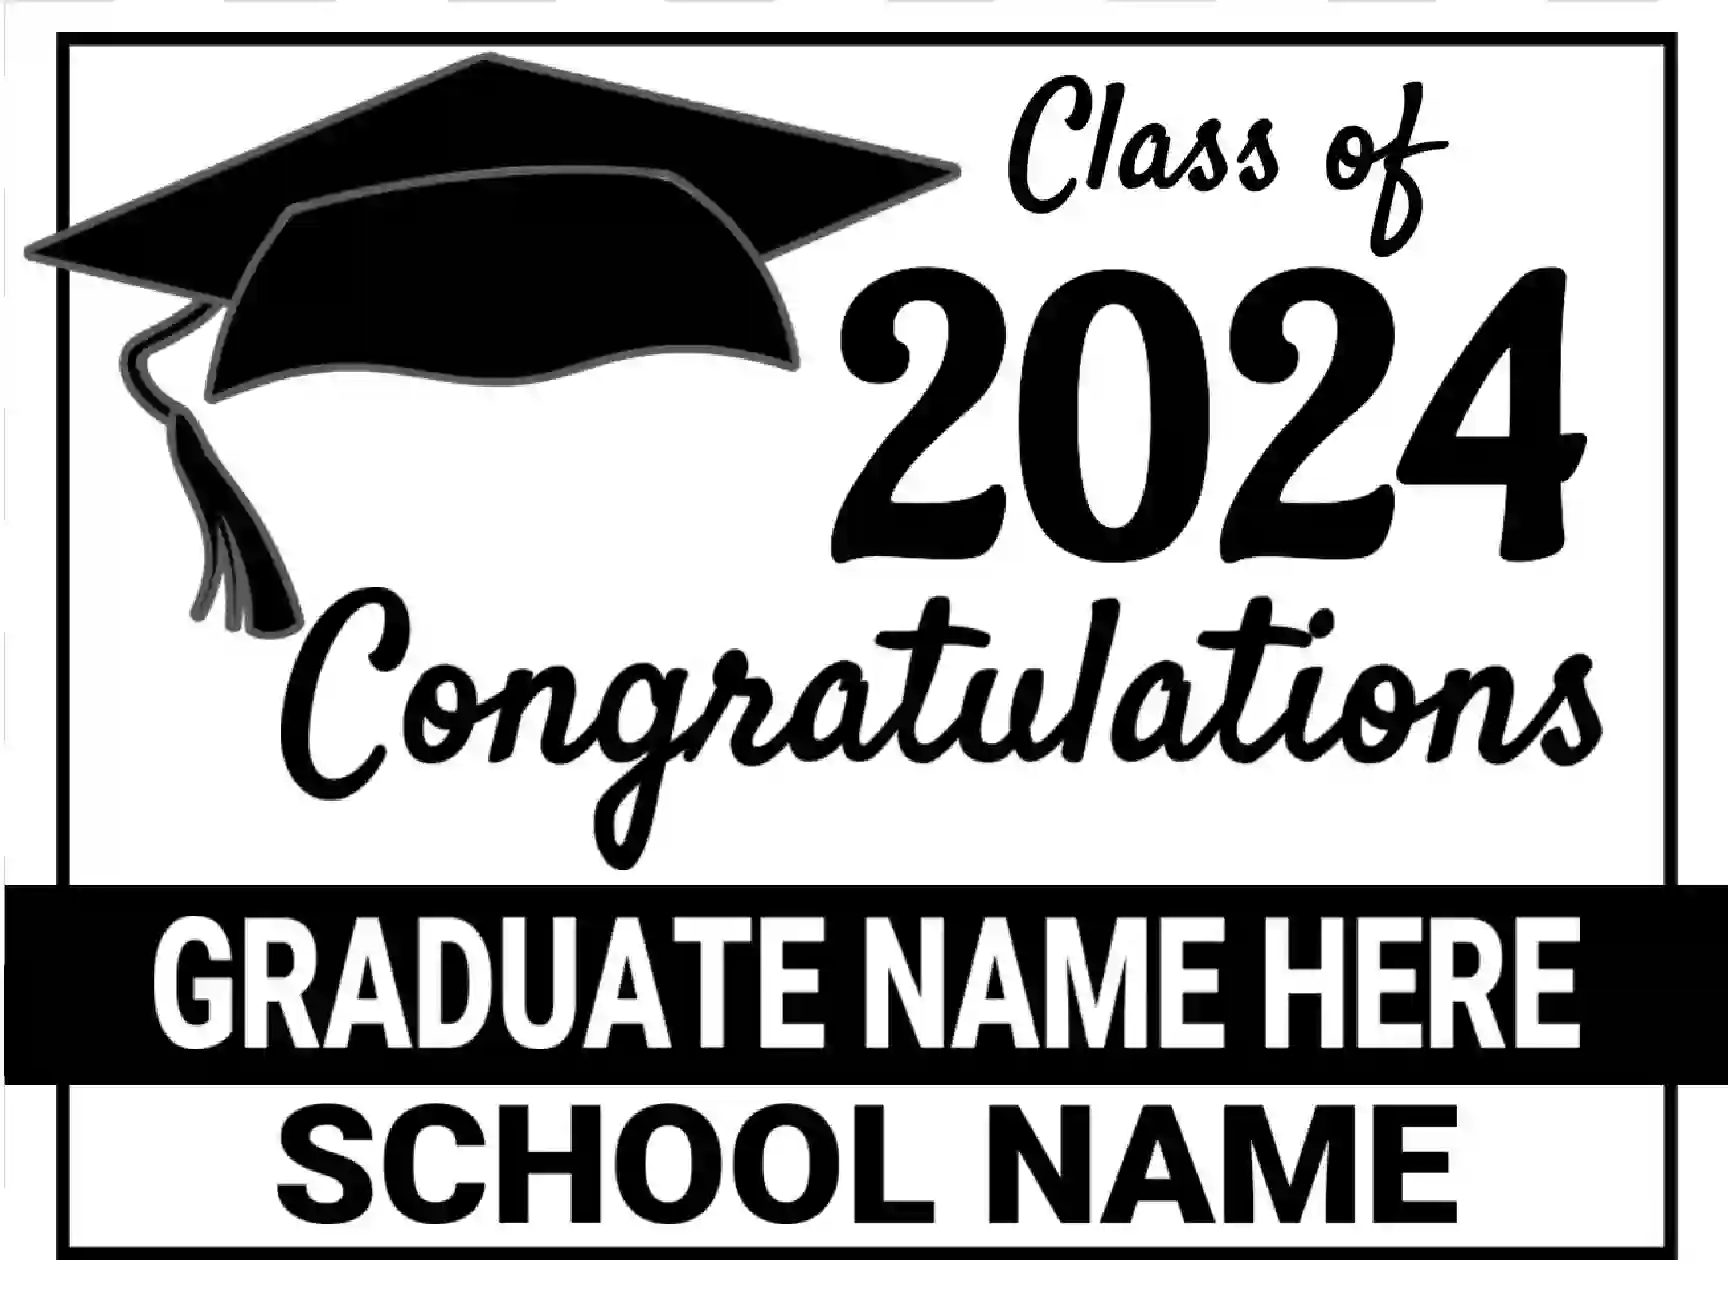 Graduation Sign Design 09